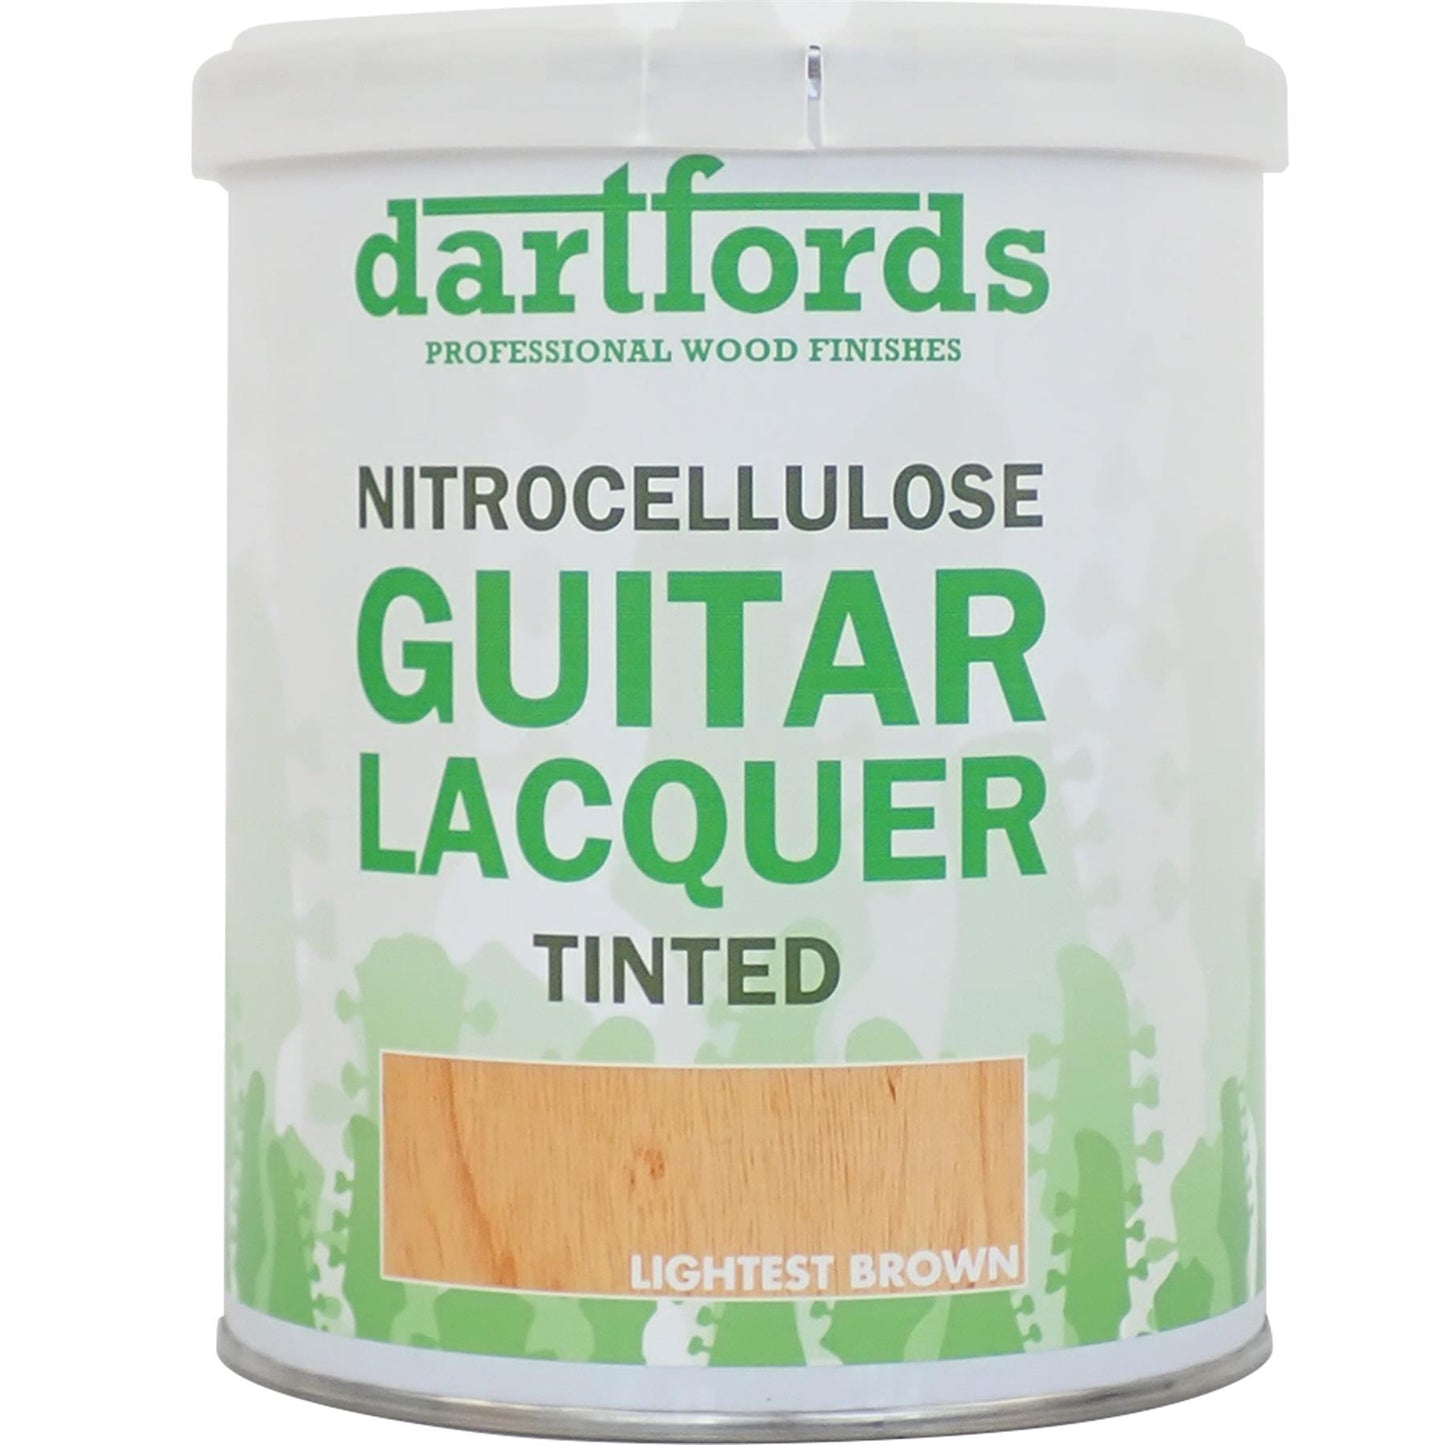 dartfords Lightest Brown Nitrocellulose Guitar Lacquer - 1 litre Tin